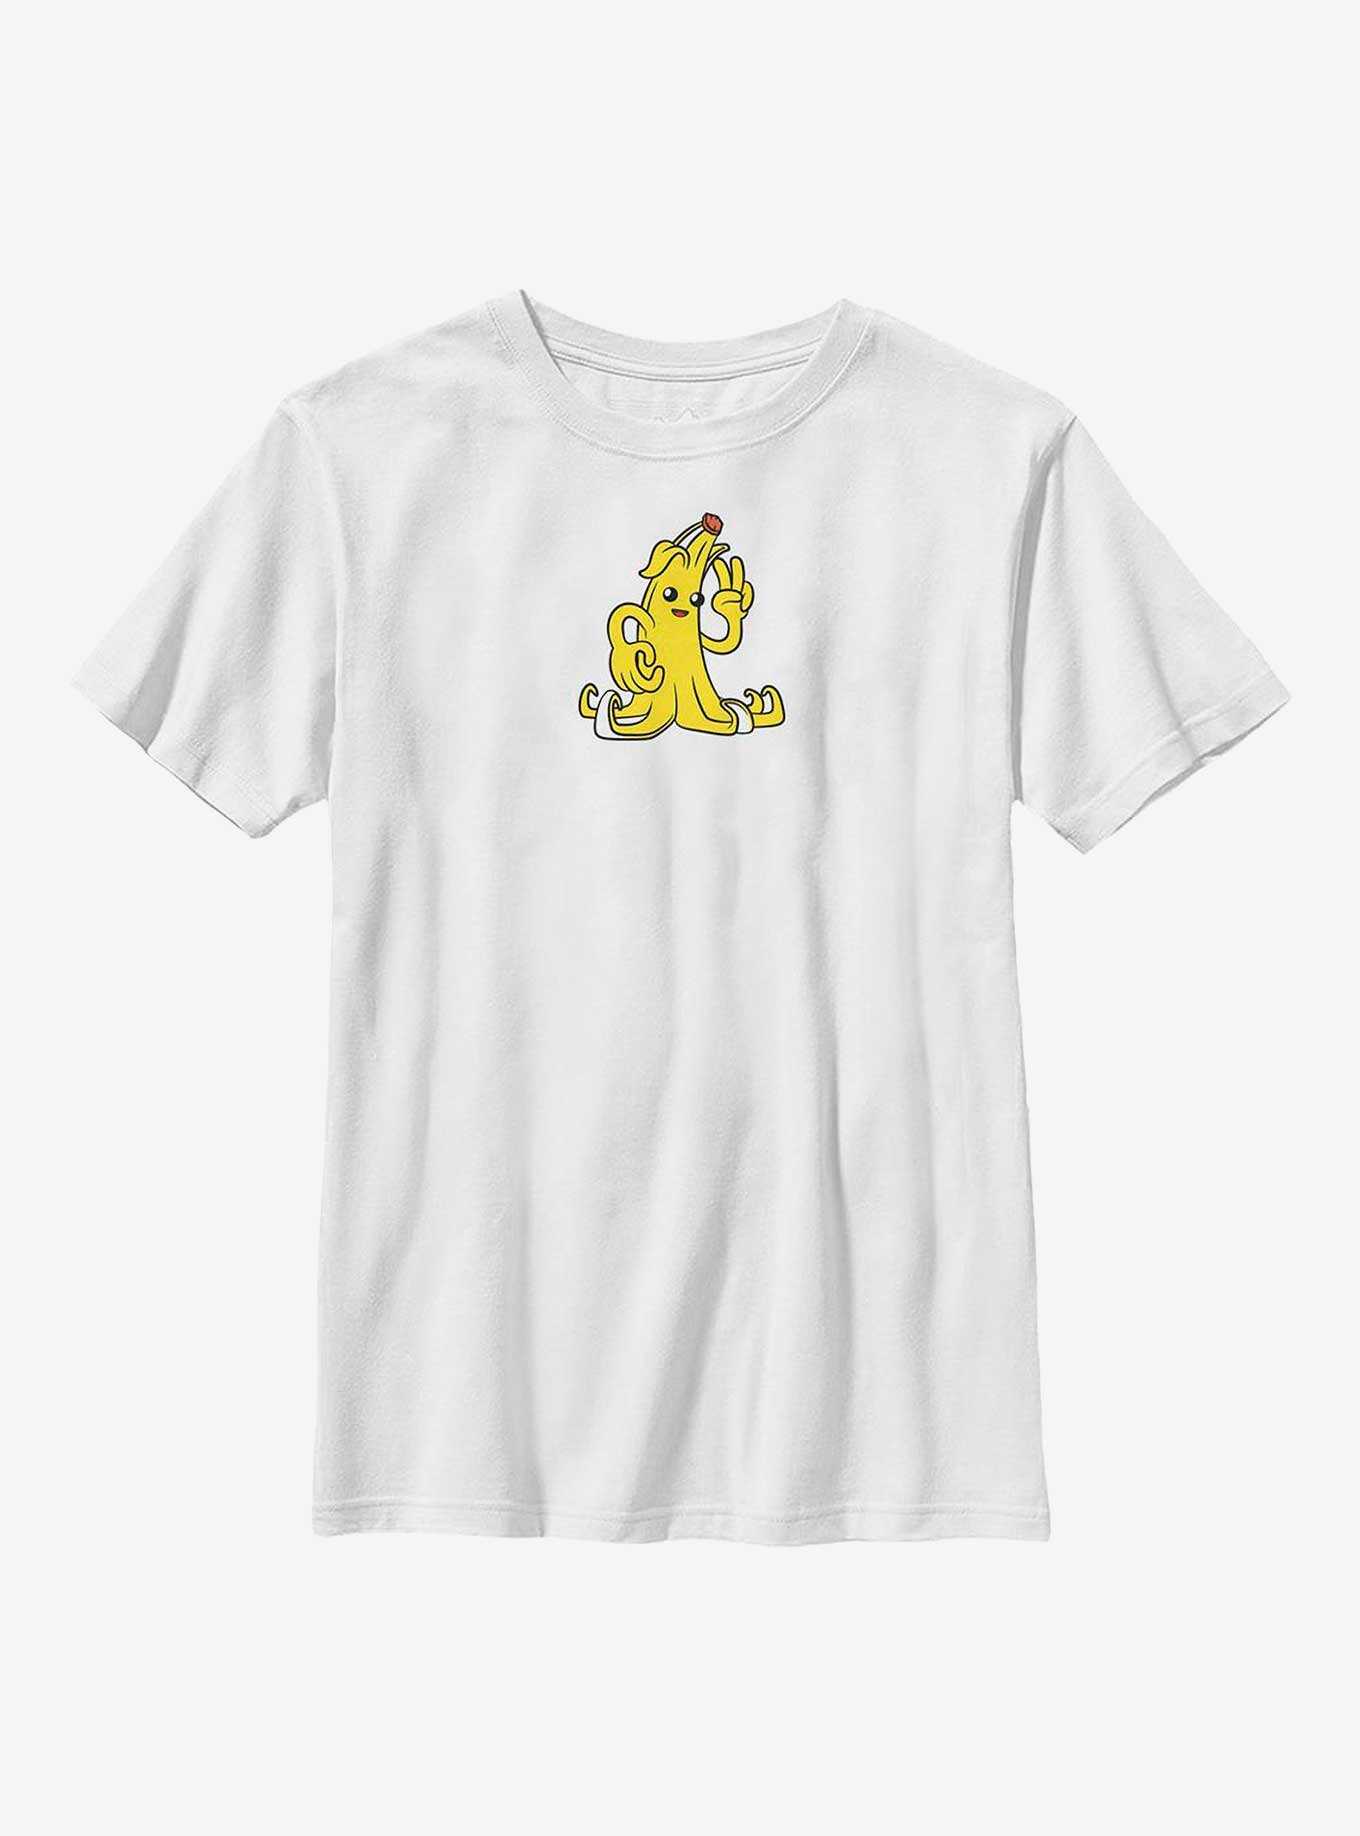 Fortnite Peely Banana Peace Youth T-Shirt, , hi-res